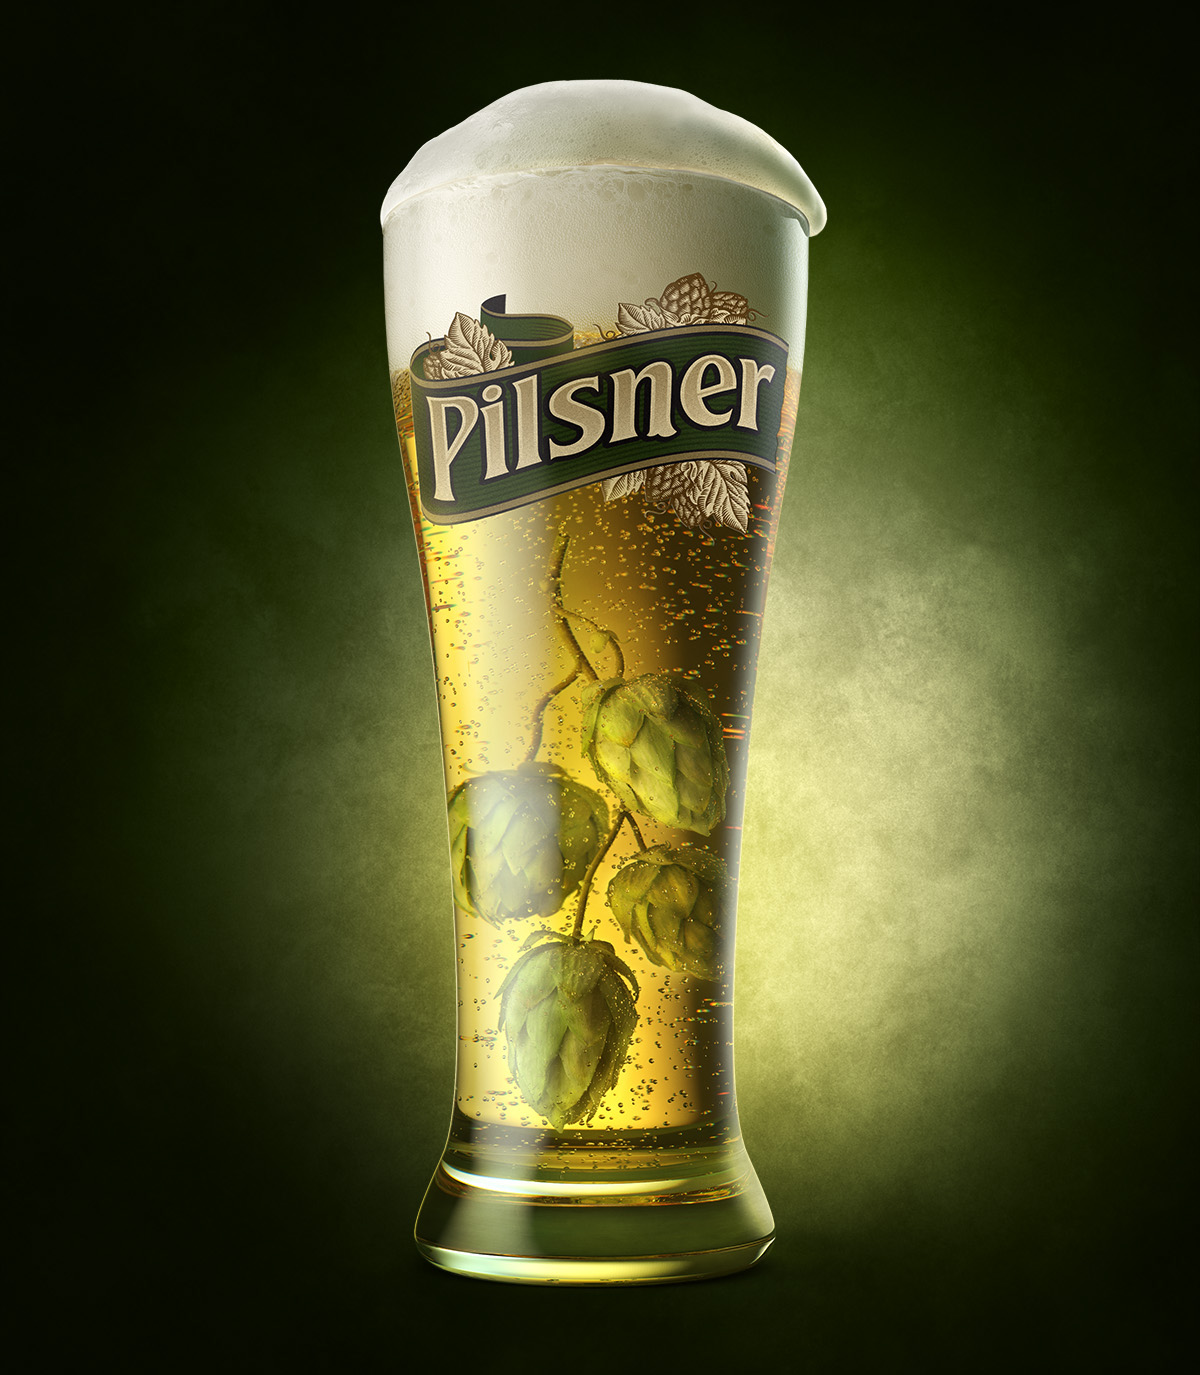 beer glass hop CGI 3D retouch venskoe bubbles Mug  jar Liquid creative Render Photo Manipulation 